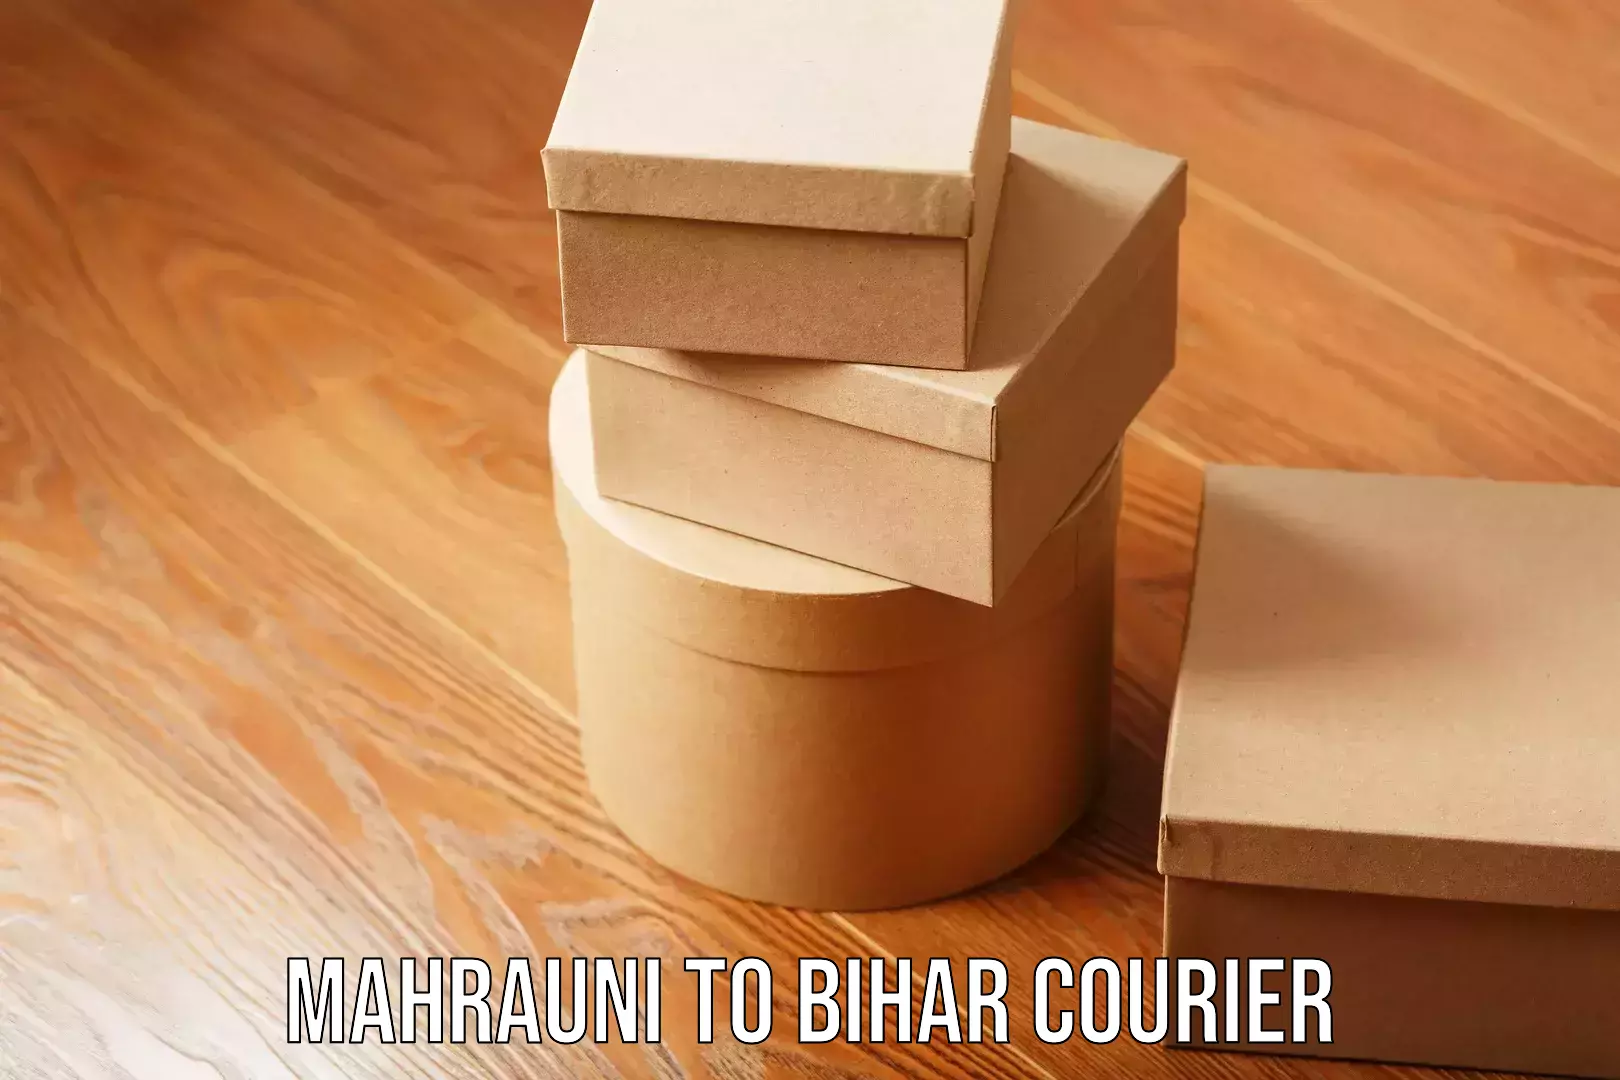 Trusted moving company Mahrauni to Bihar